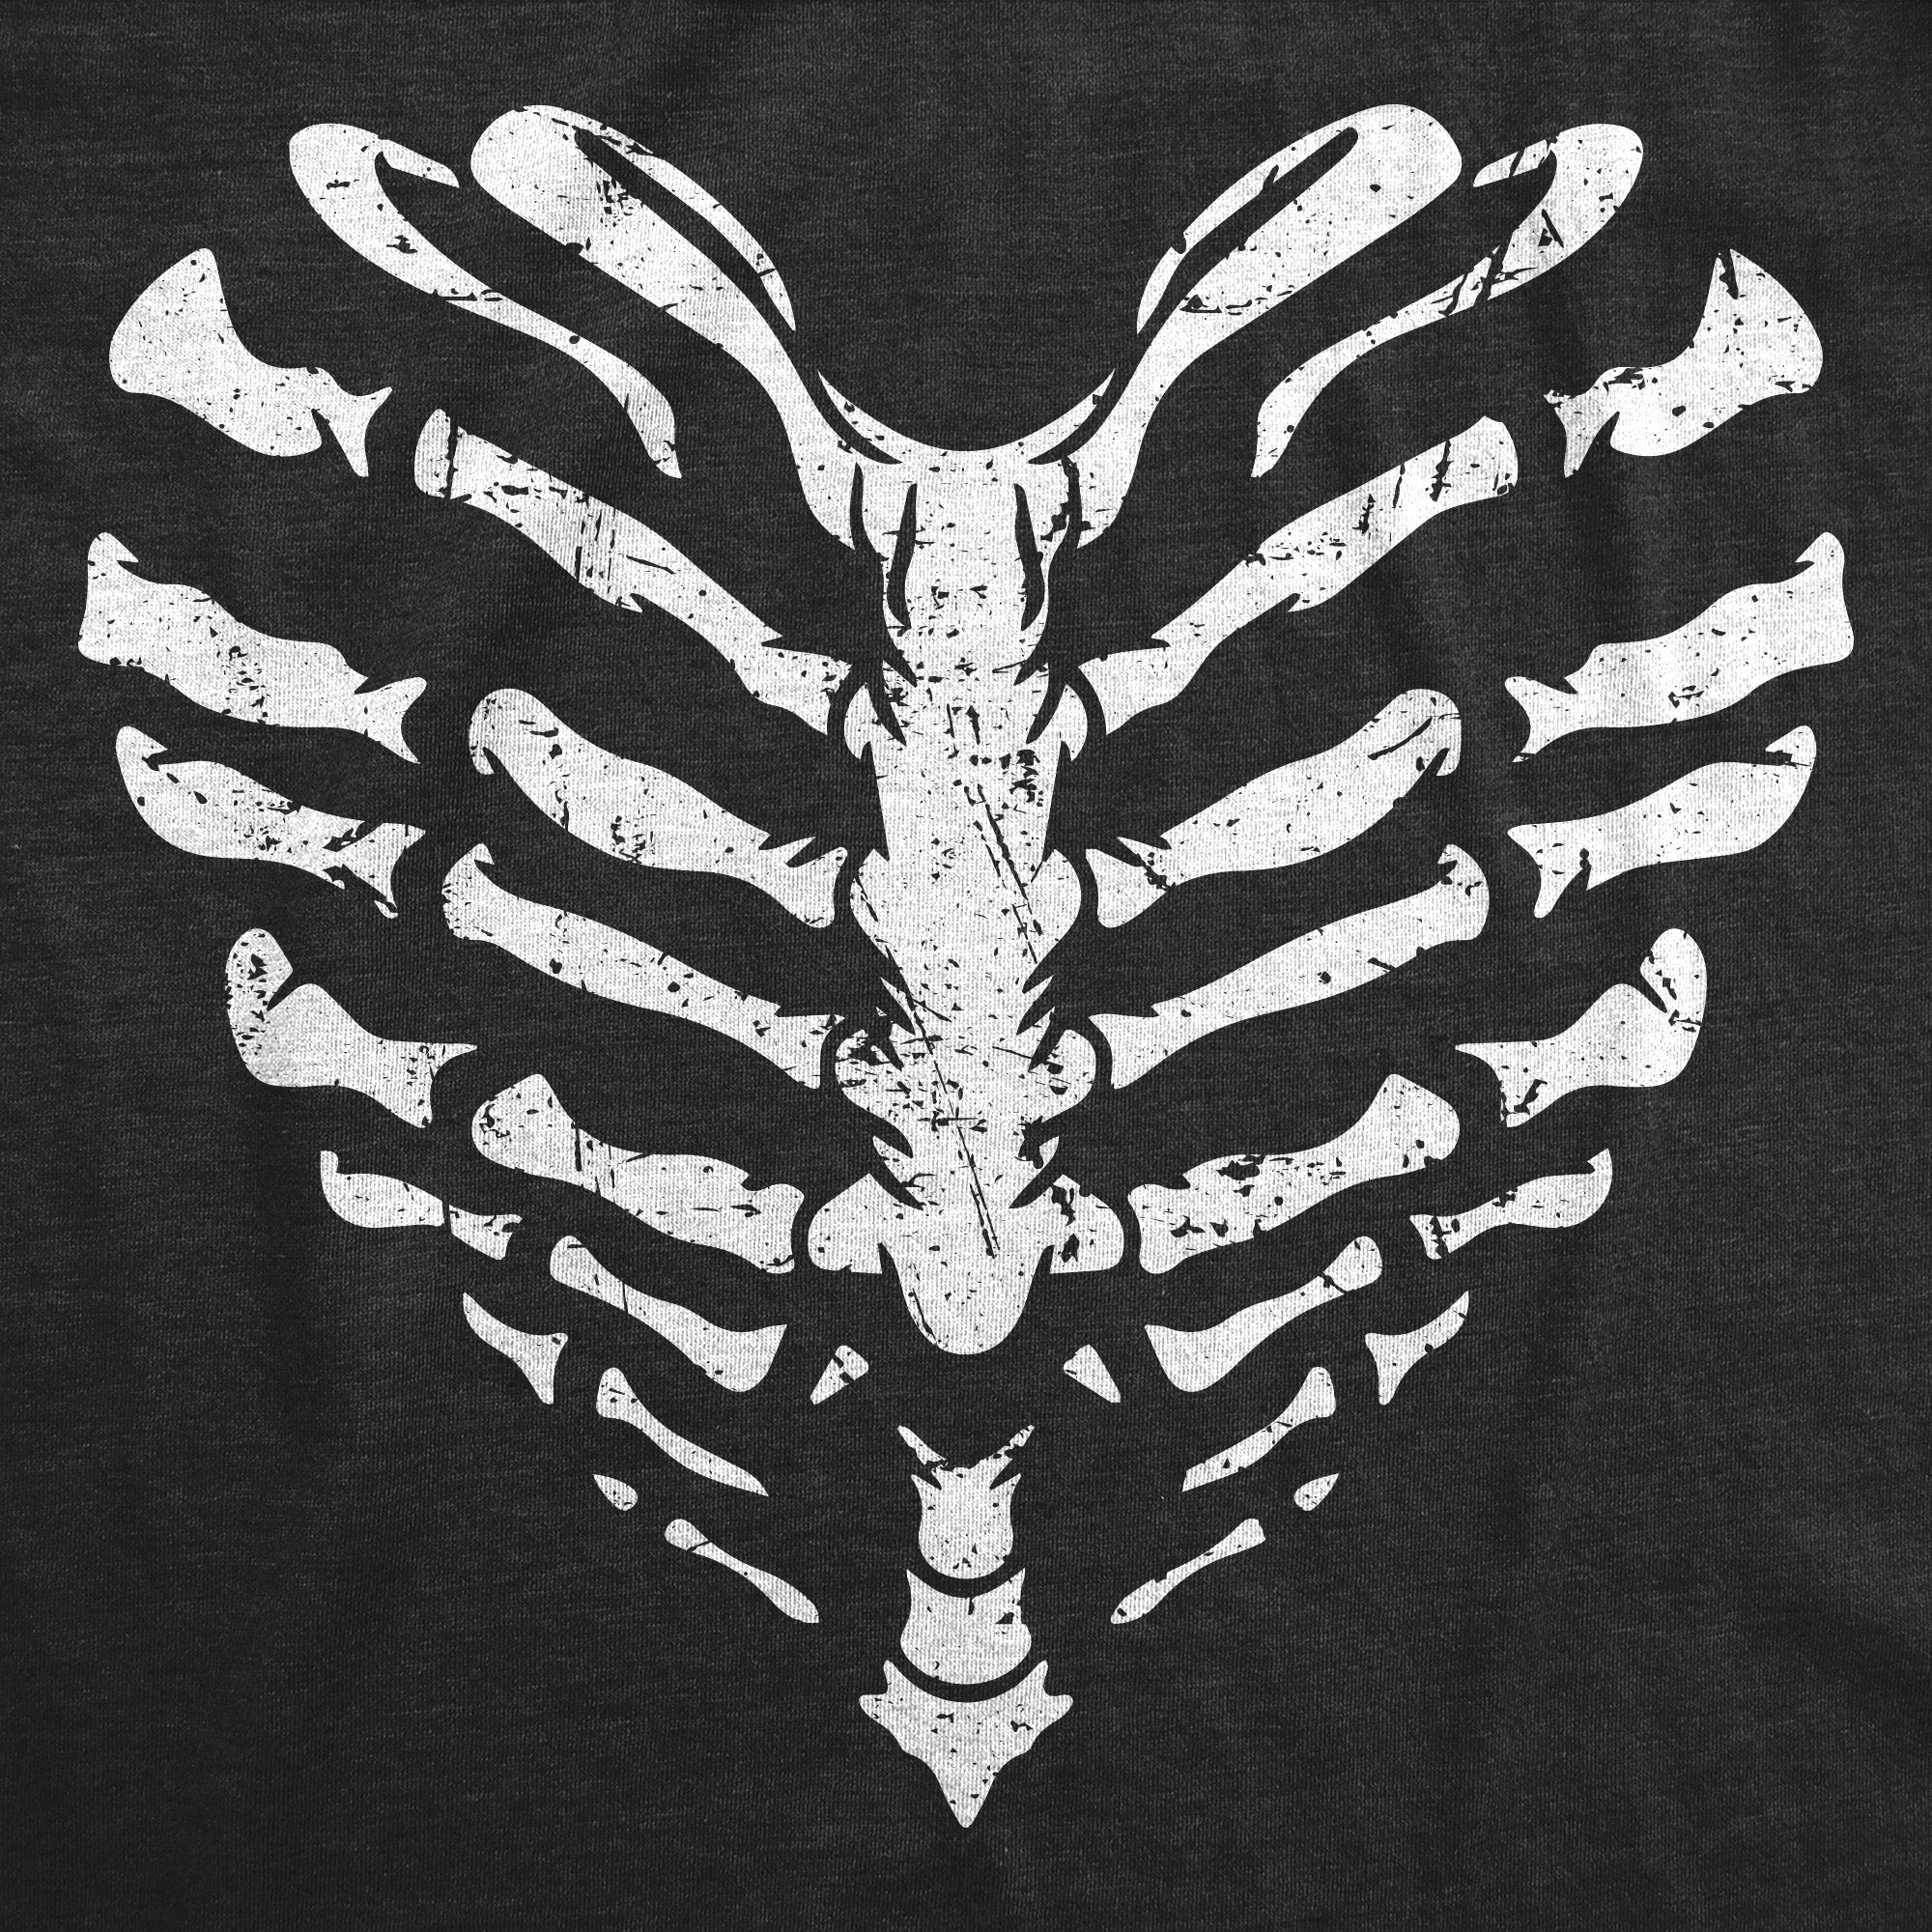 Funny Heather Black - Skeleton Ribcage Heart Skeleton Ribcage Heart Womens T Shirt Nerdy Sarcastic Tee